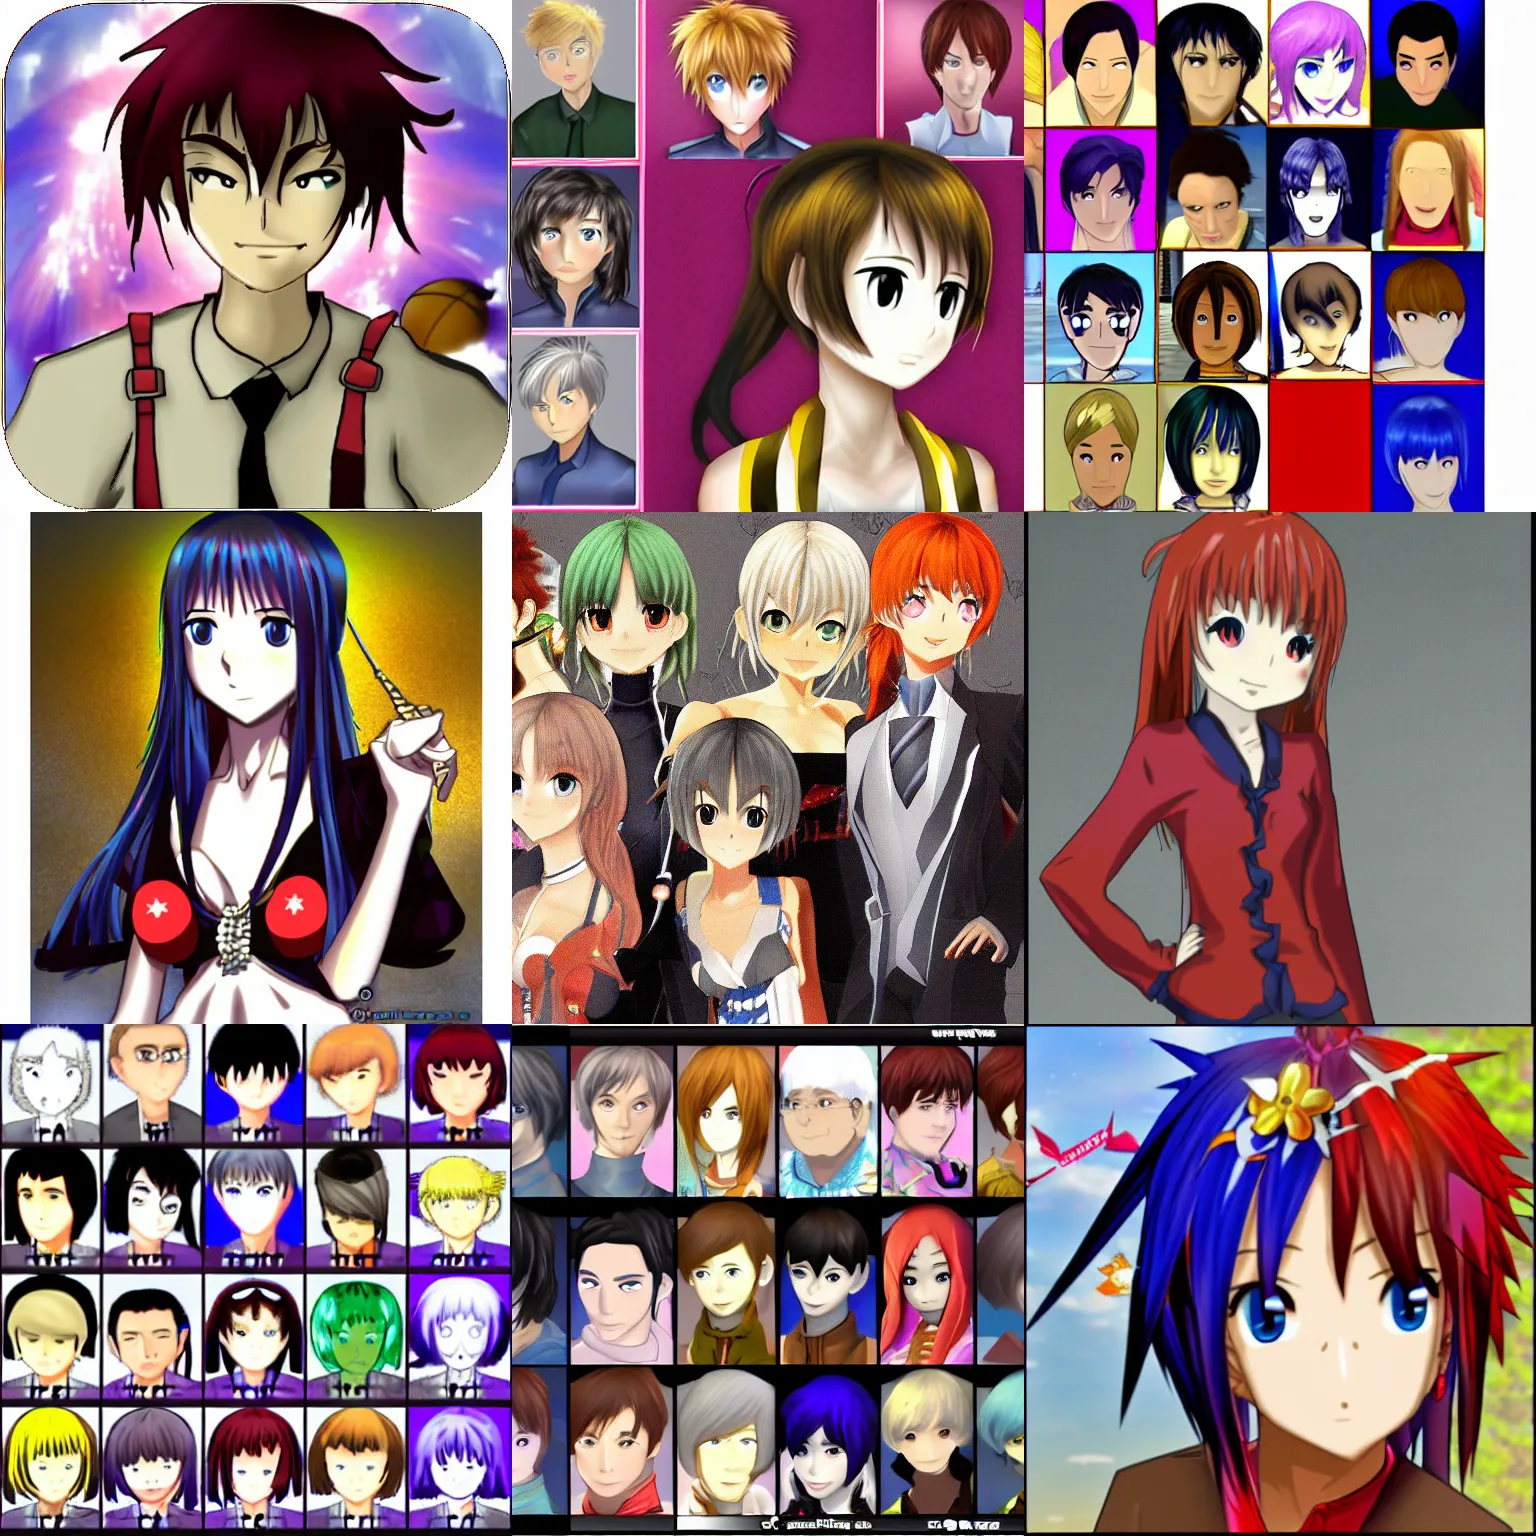 Prompt: 2006 forum anime avatar